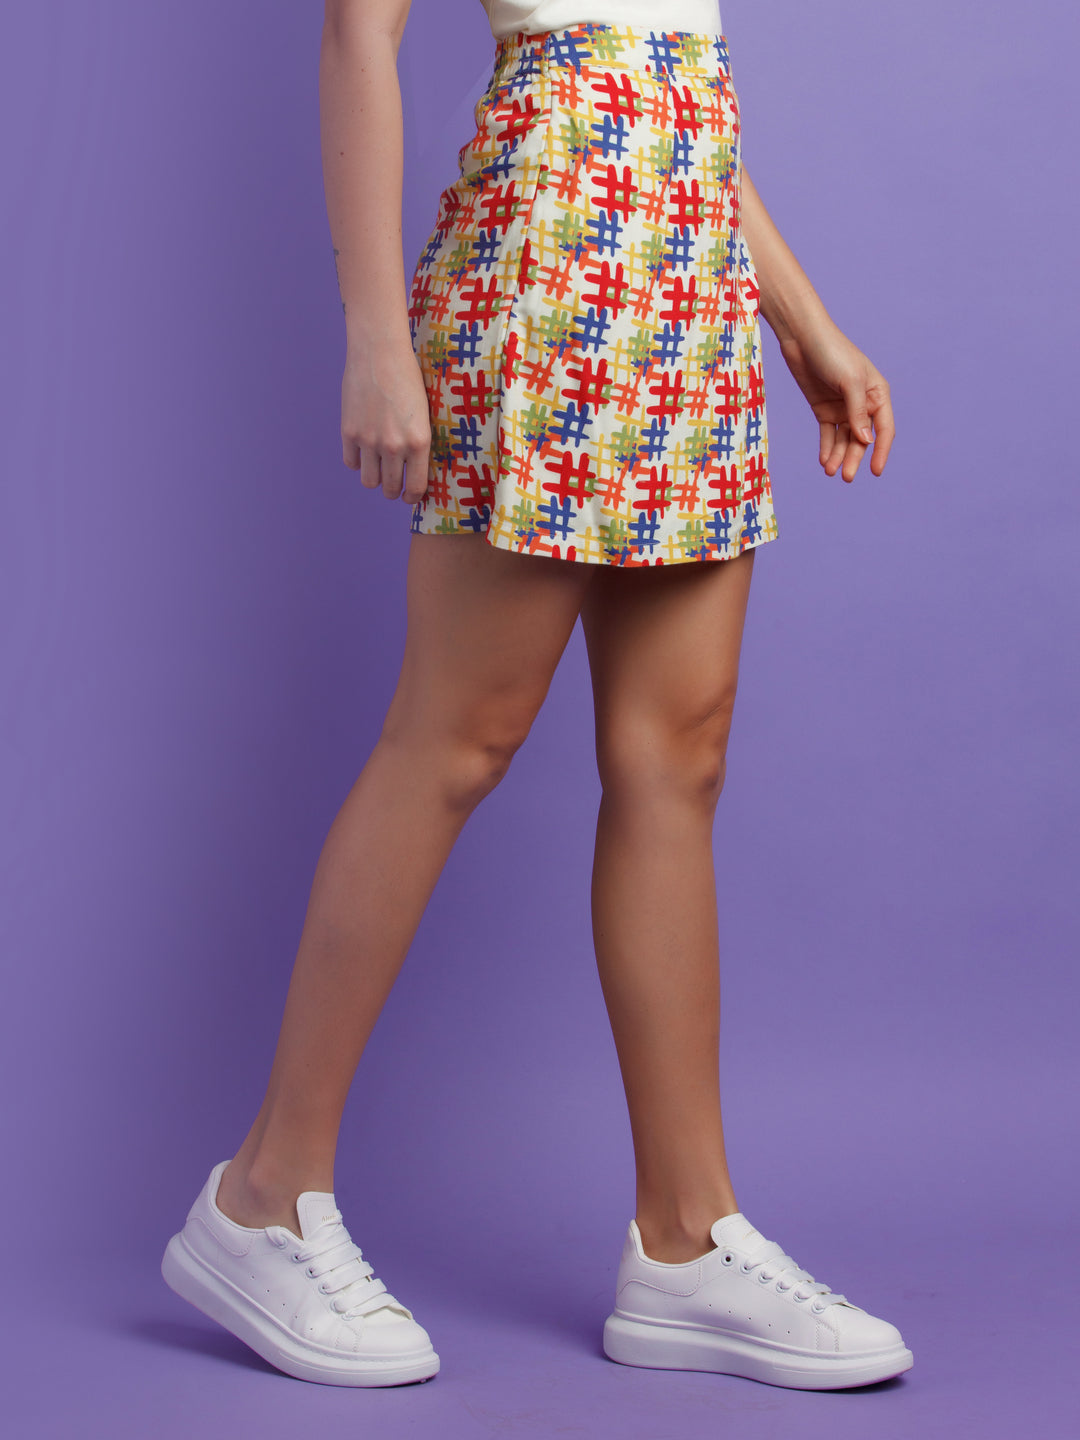 Multi Color Printed Skirt For Women